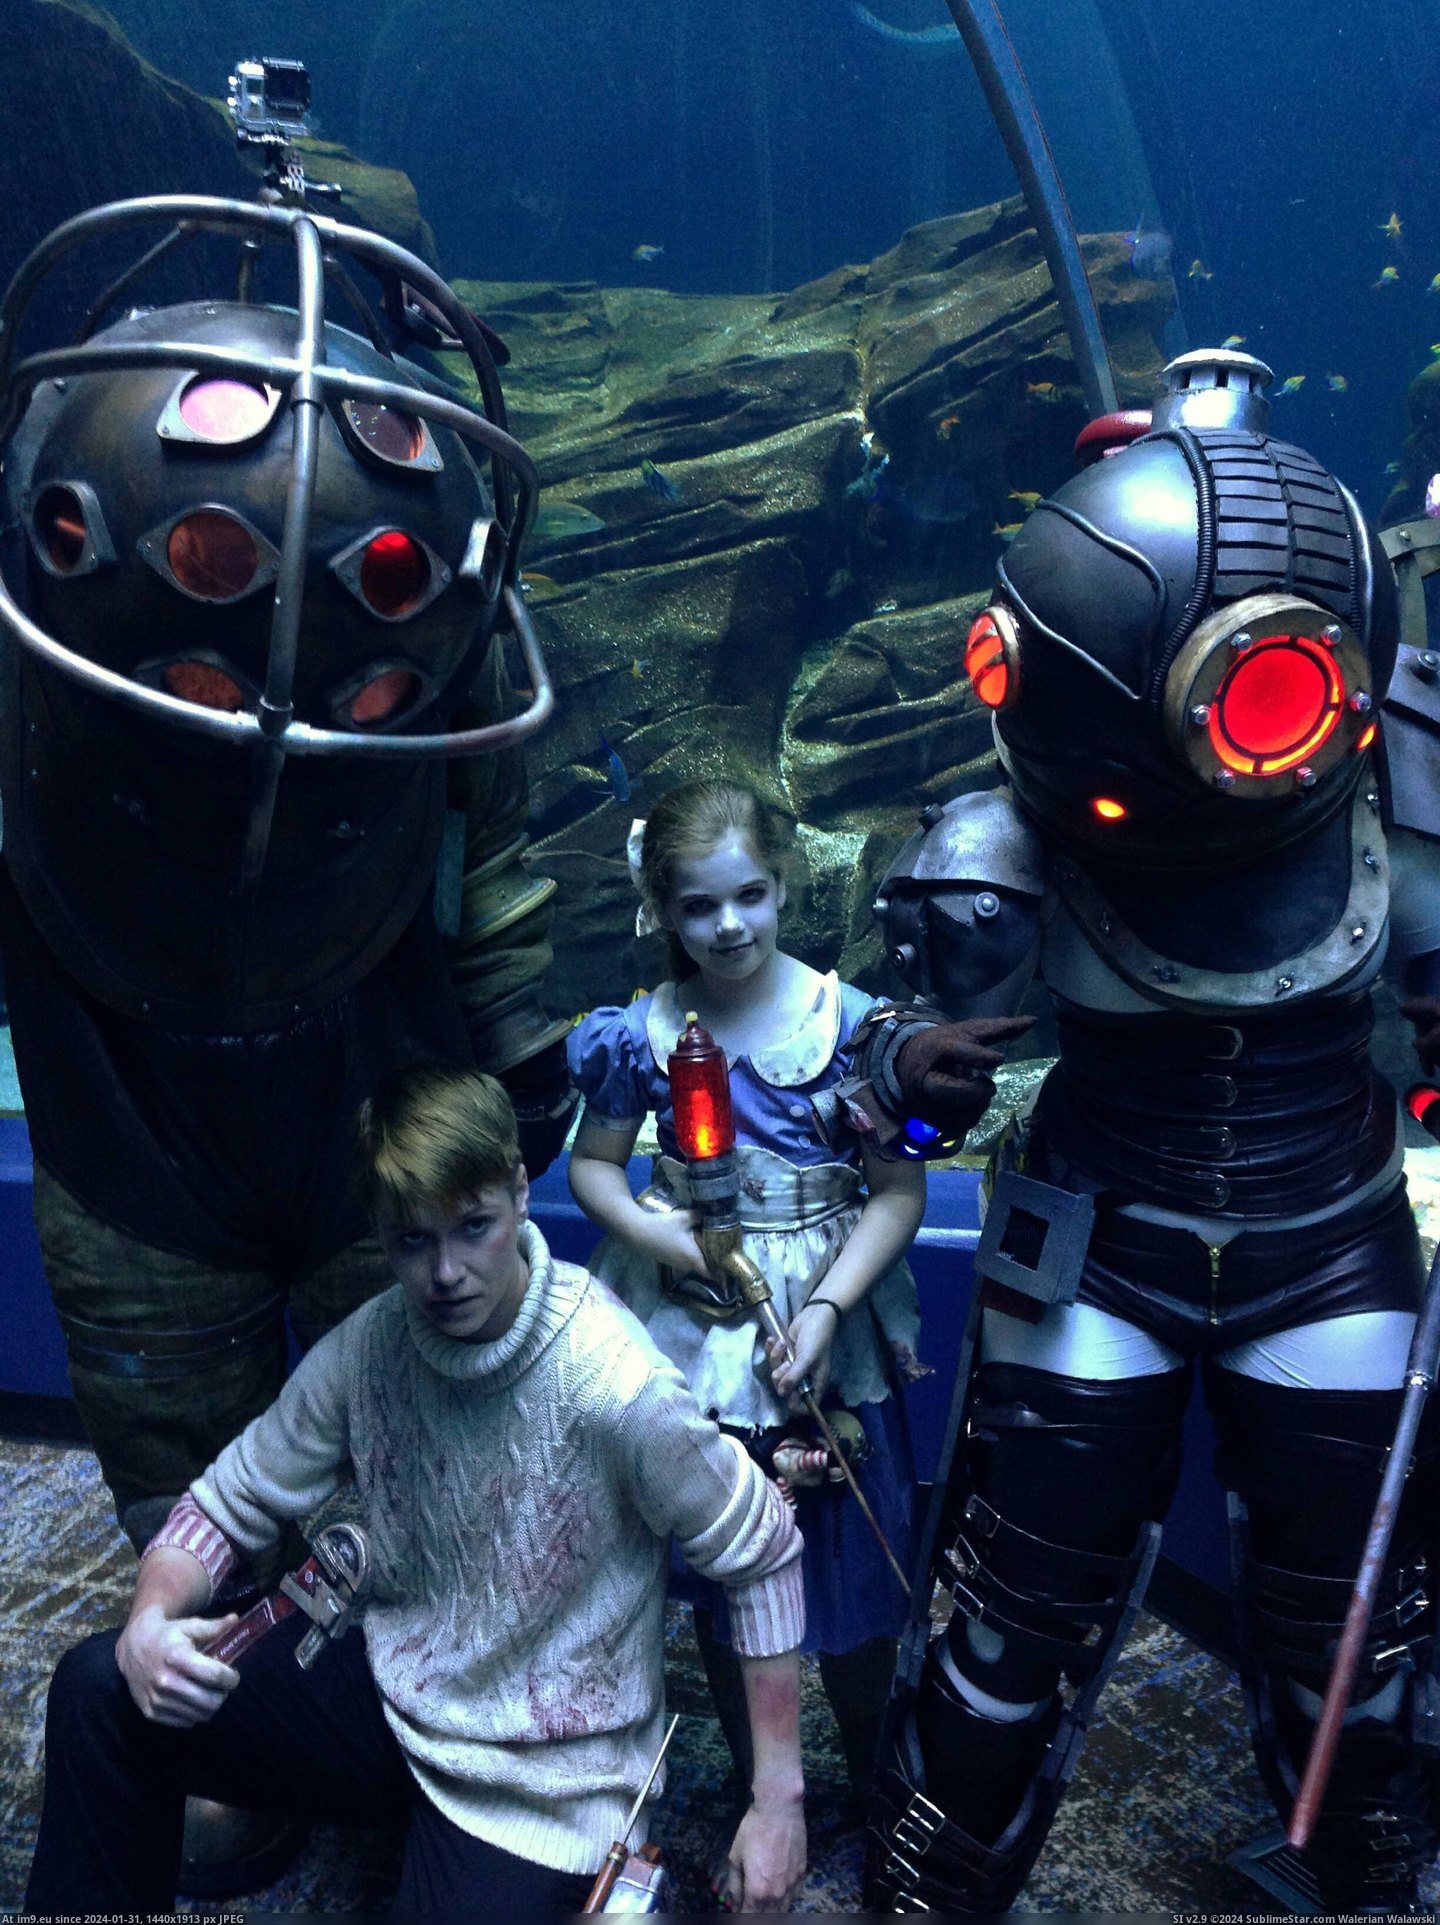 #Gaming #Family #Dragon #Bioshock #Aquarium #Rapture #Cosplay #Con #Georgia [Gaming] BioShock Rapture family cosplay at the Georgia aquarium during Dragon Con. Pic. (Image of album My r/GAMING favs))